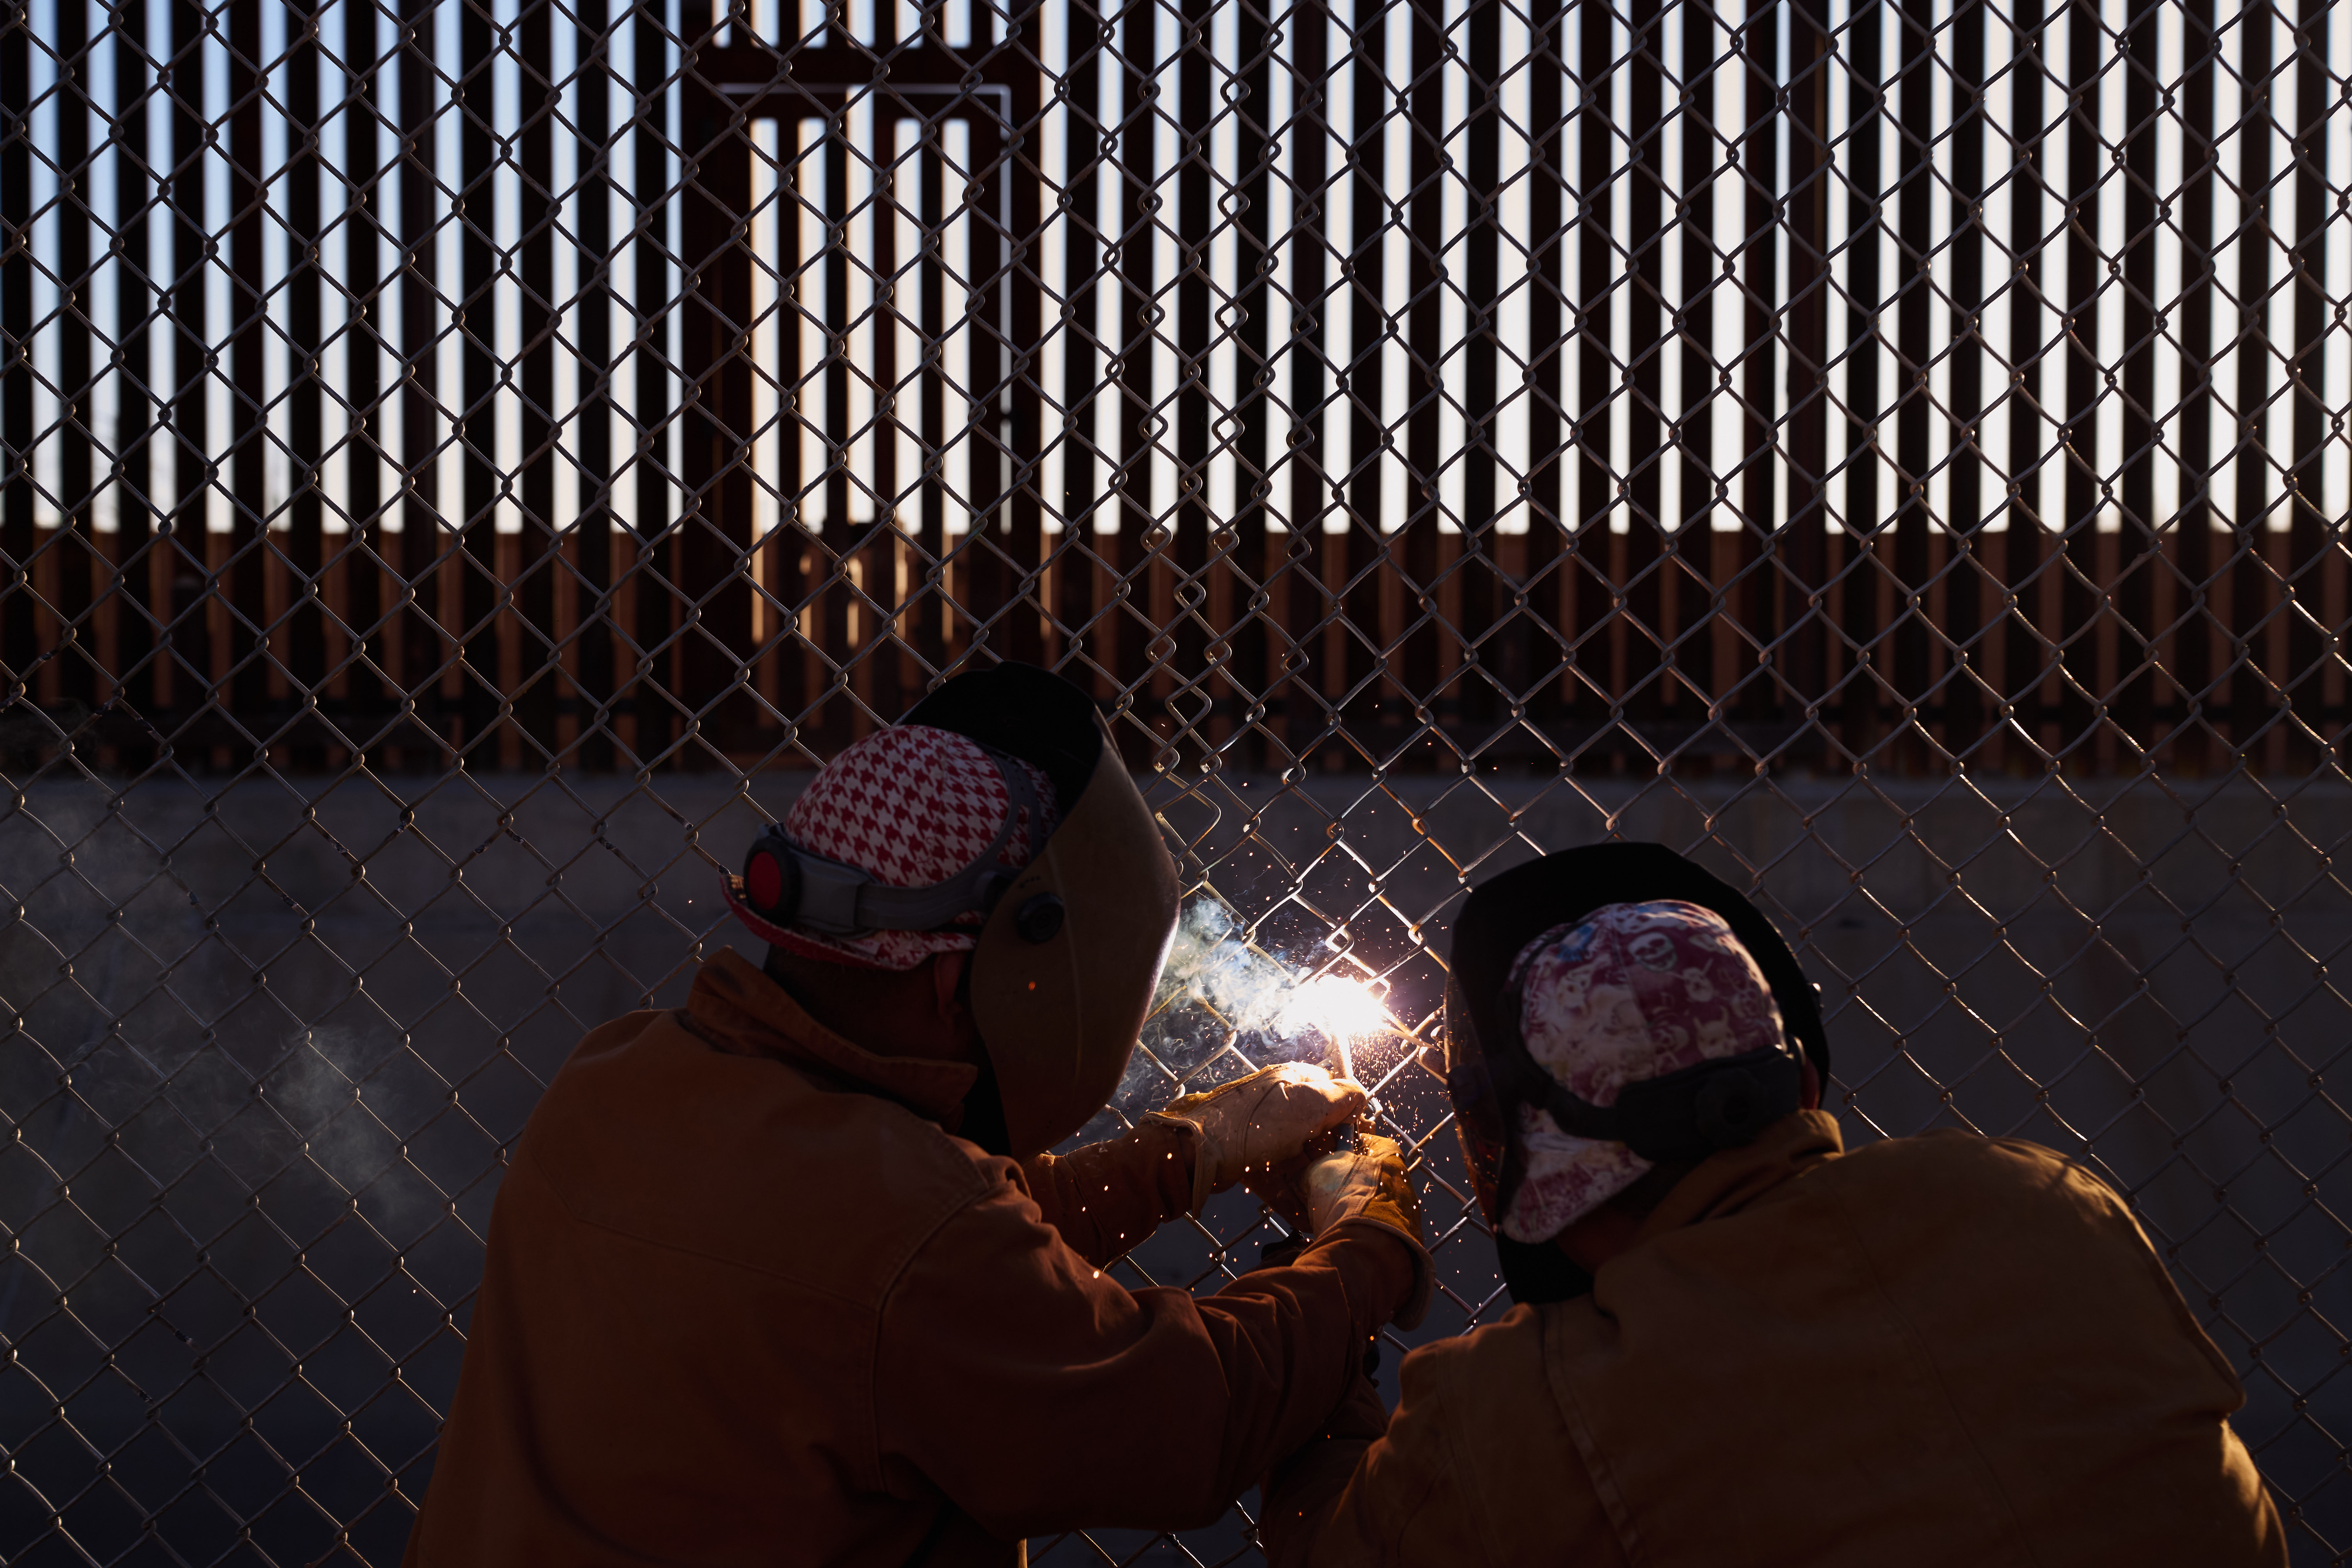 Welders weld gaps in the near the U.S.-Mexico Border Wall